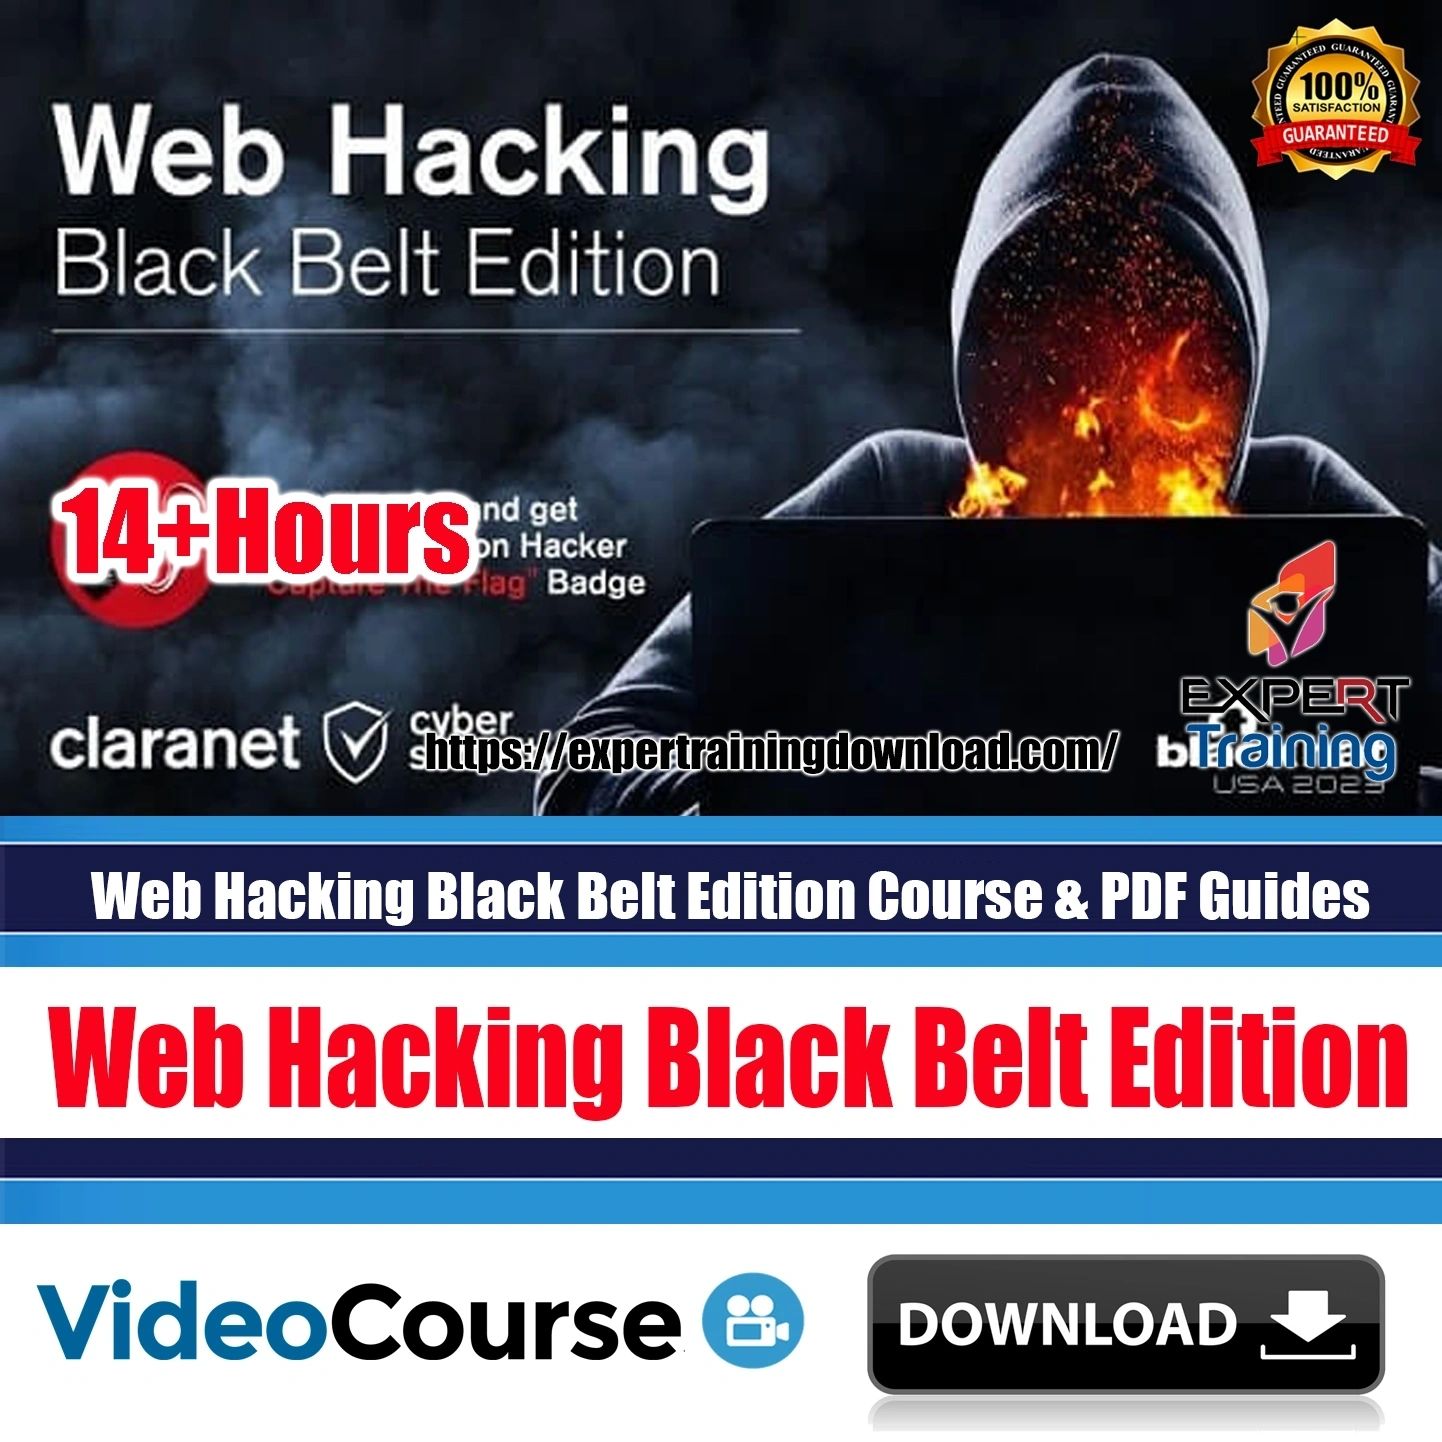 Web Hacking Black Belt Edition Course & PDF Guides